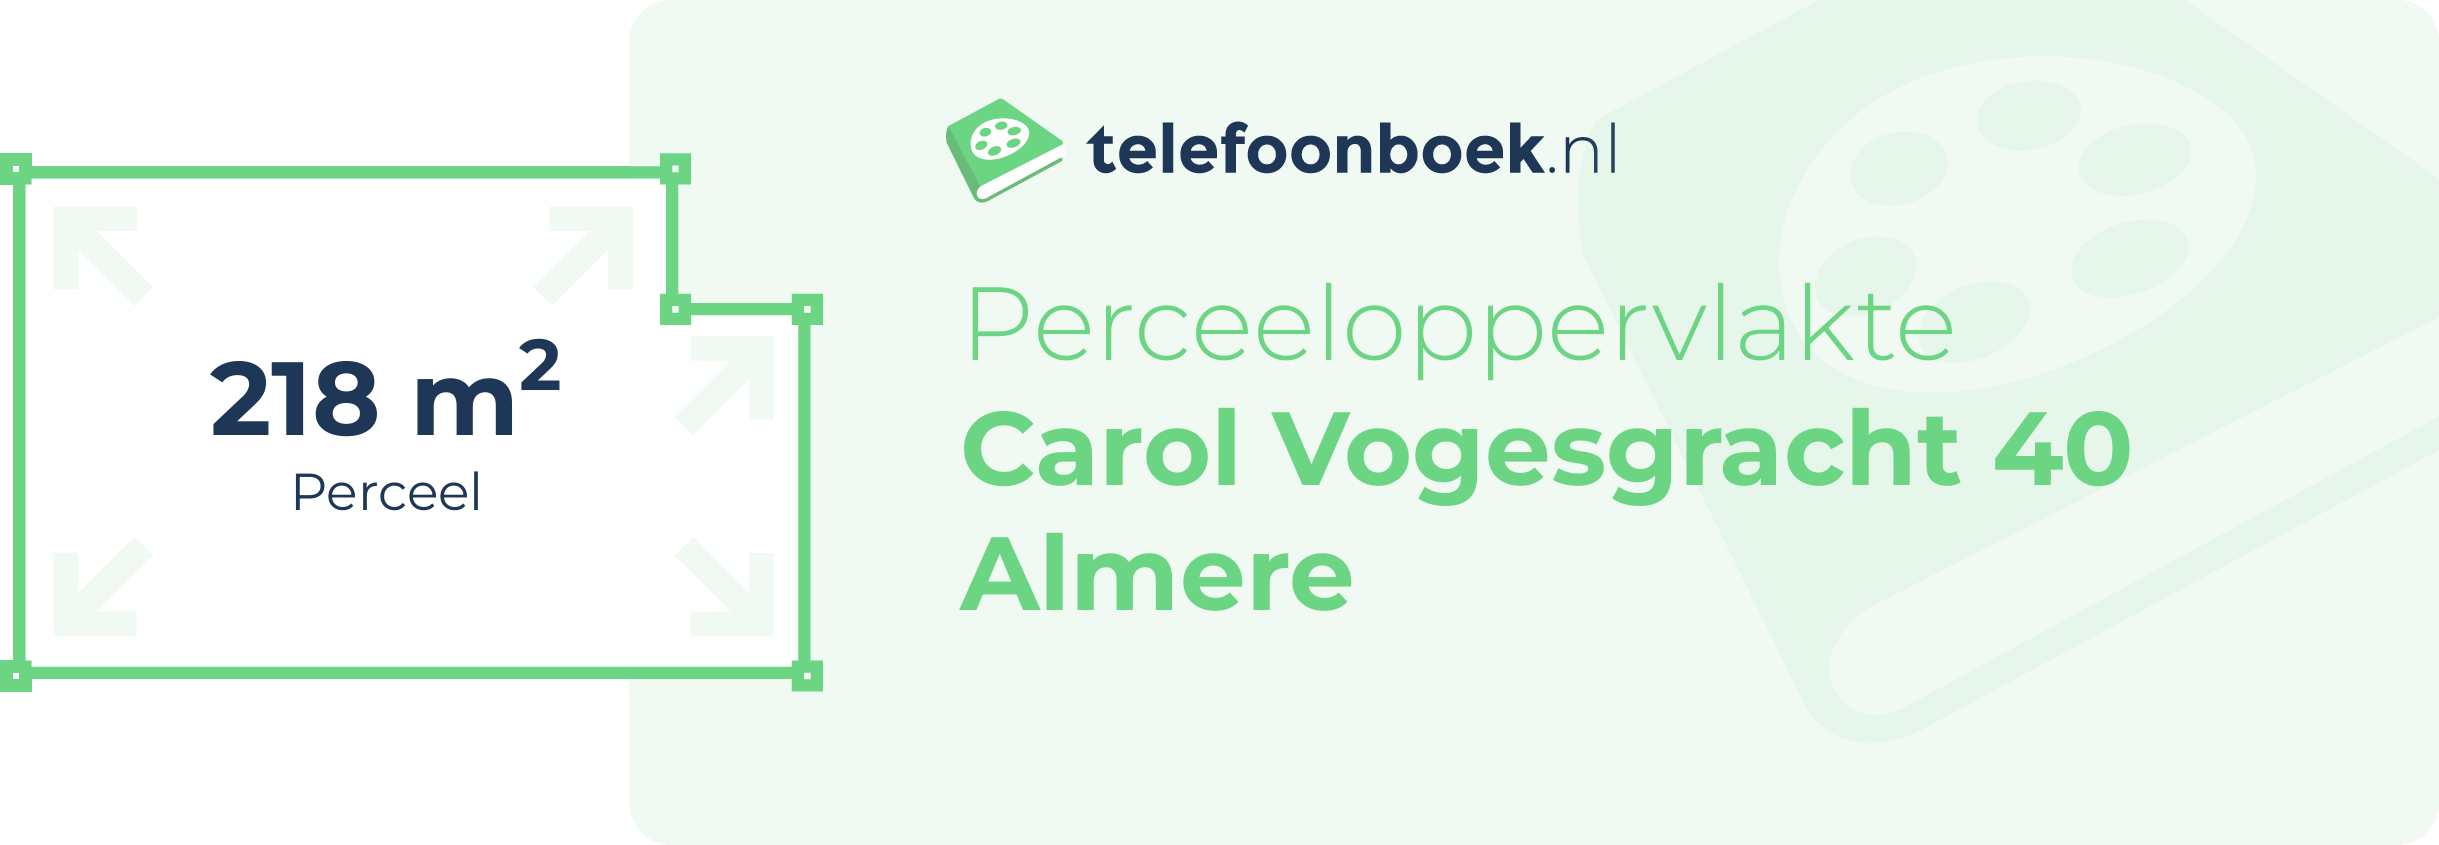 Perceeloppervlakte Carol Vogesgracht 40 Almere